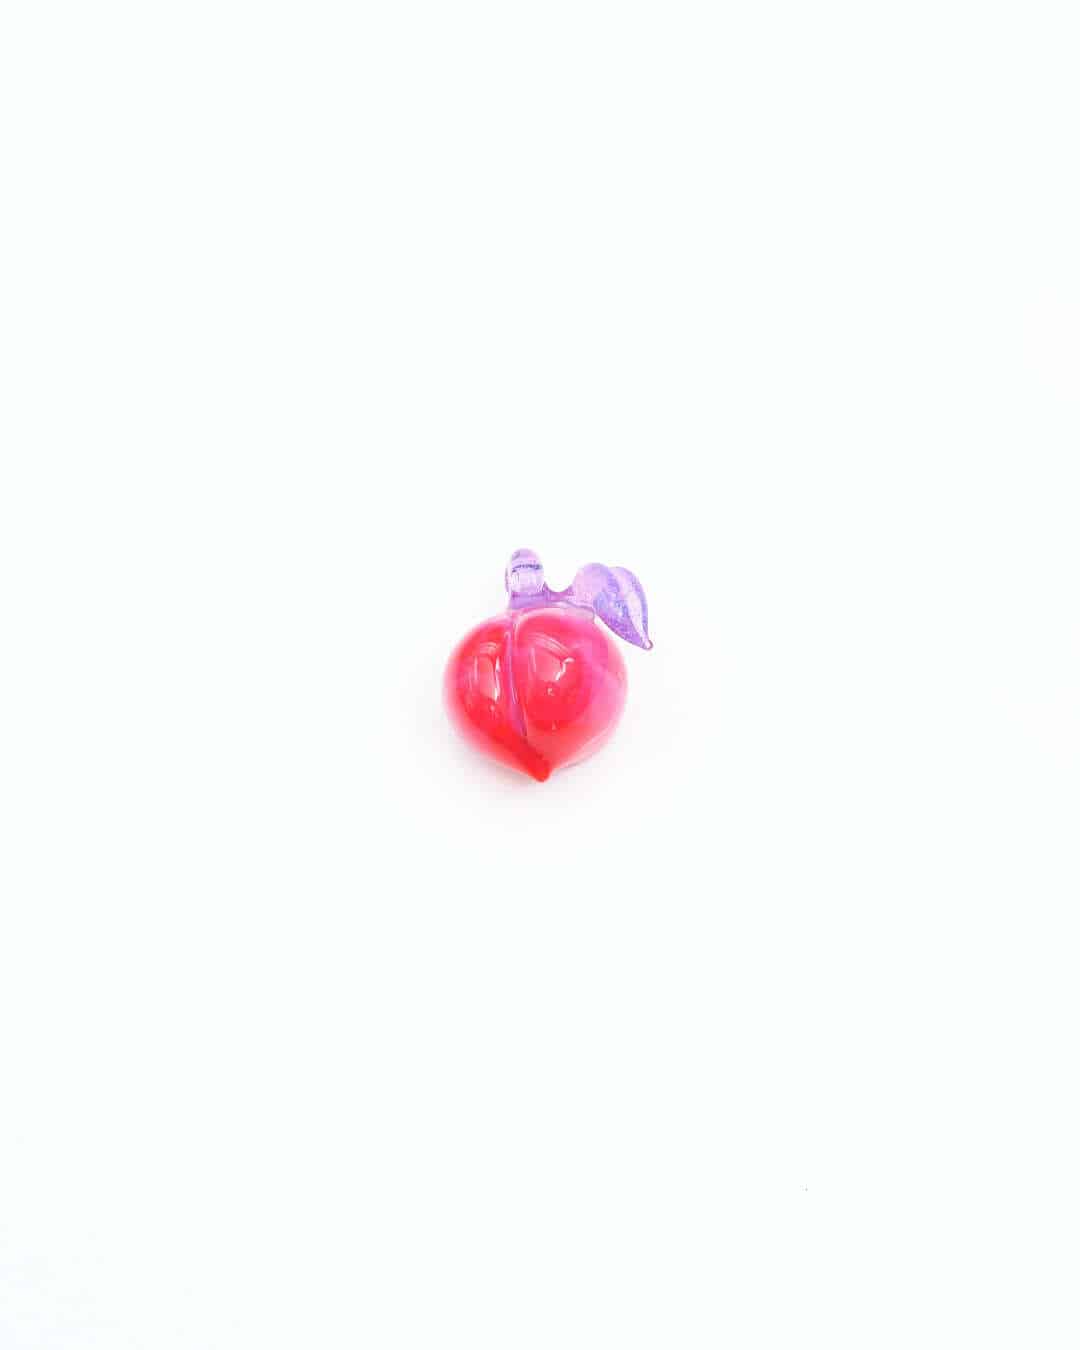 artisan-crafted glass pendant - (7C) Red Peach w/ Purple/Pink Stem Pendant by Gnarla Carla